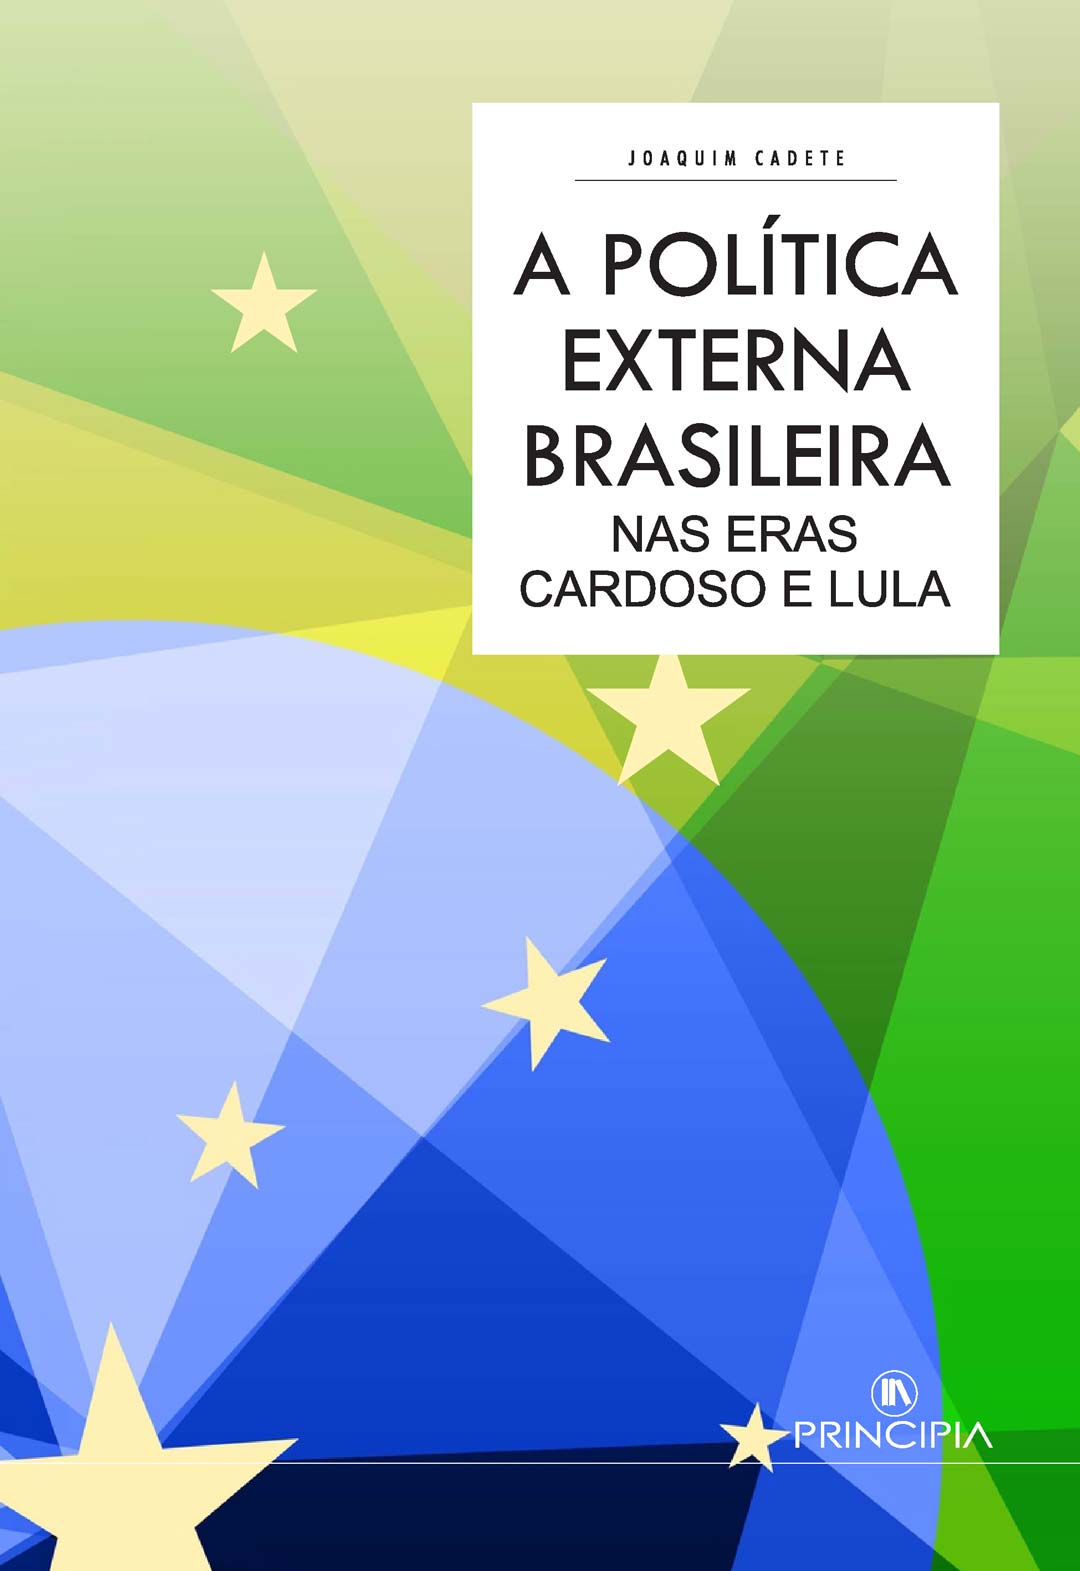 A Politica Externa Brasileira nas Eras Cardoso e Lula